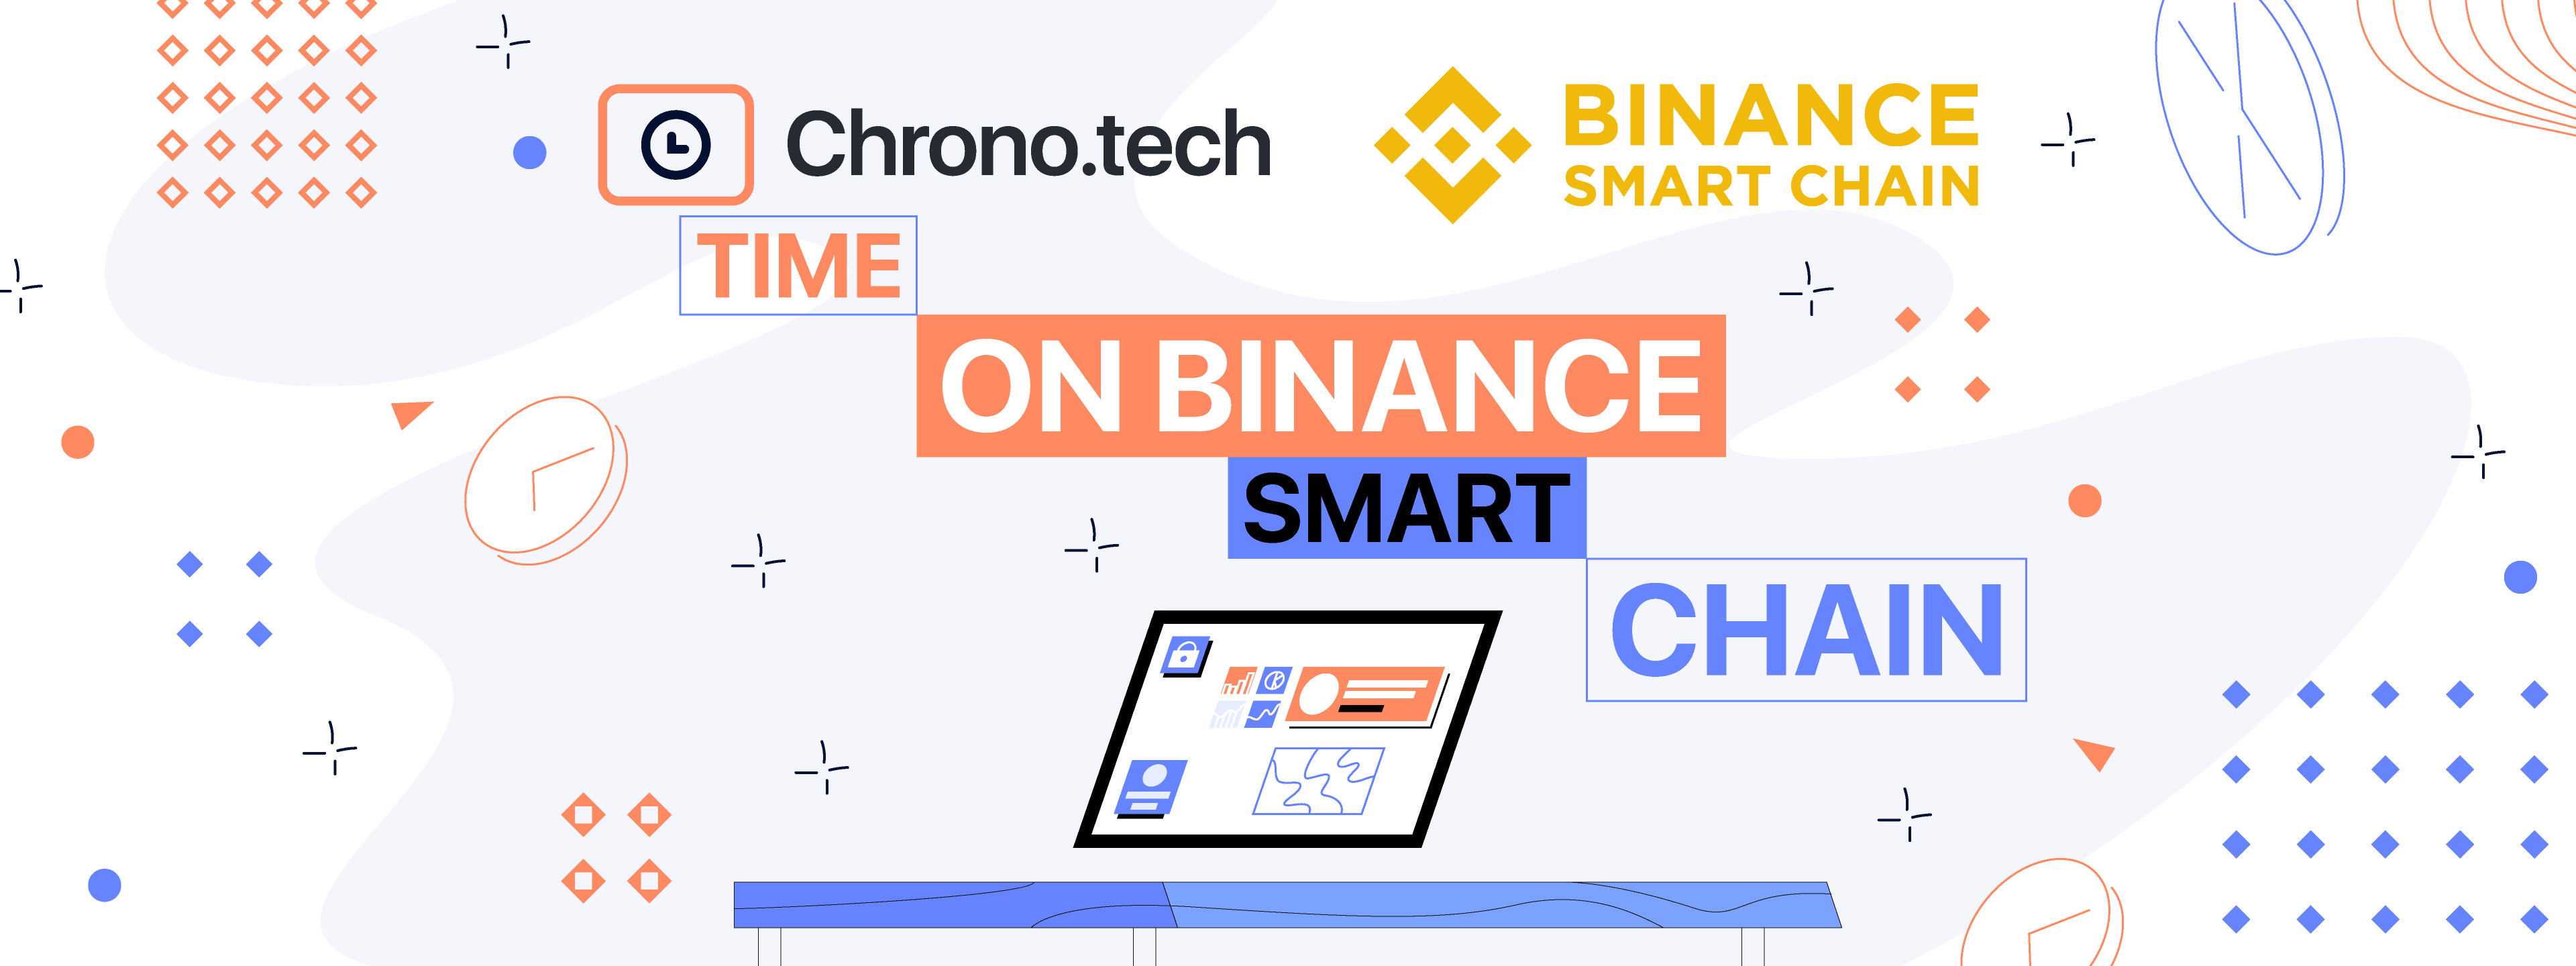 TIME Arrives on Binance Smart Chain!